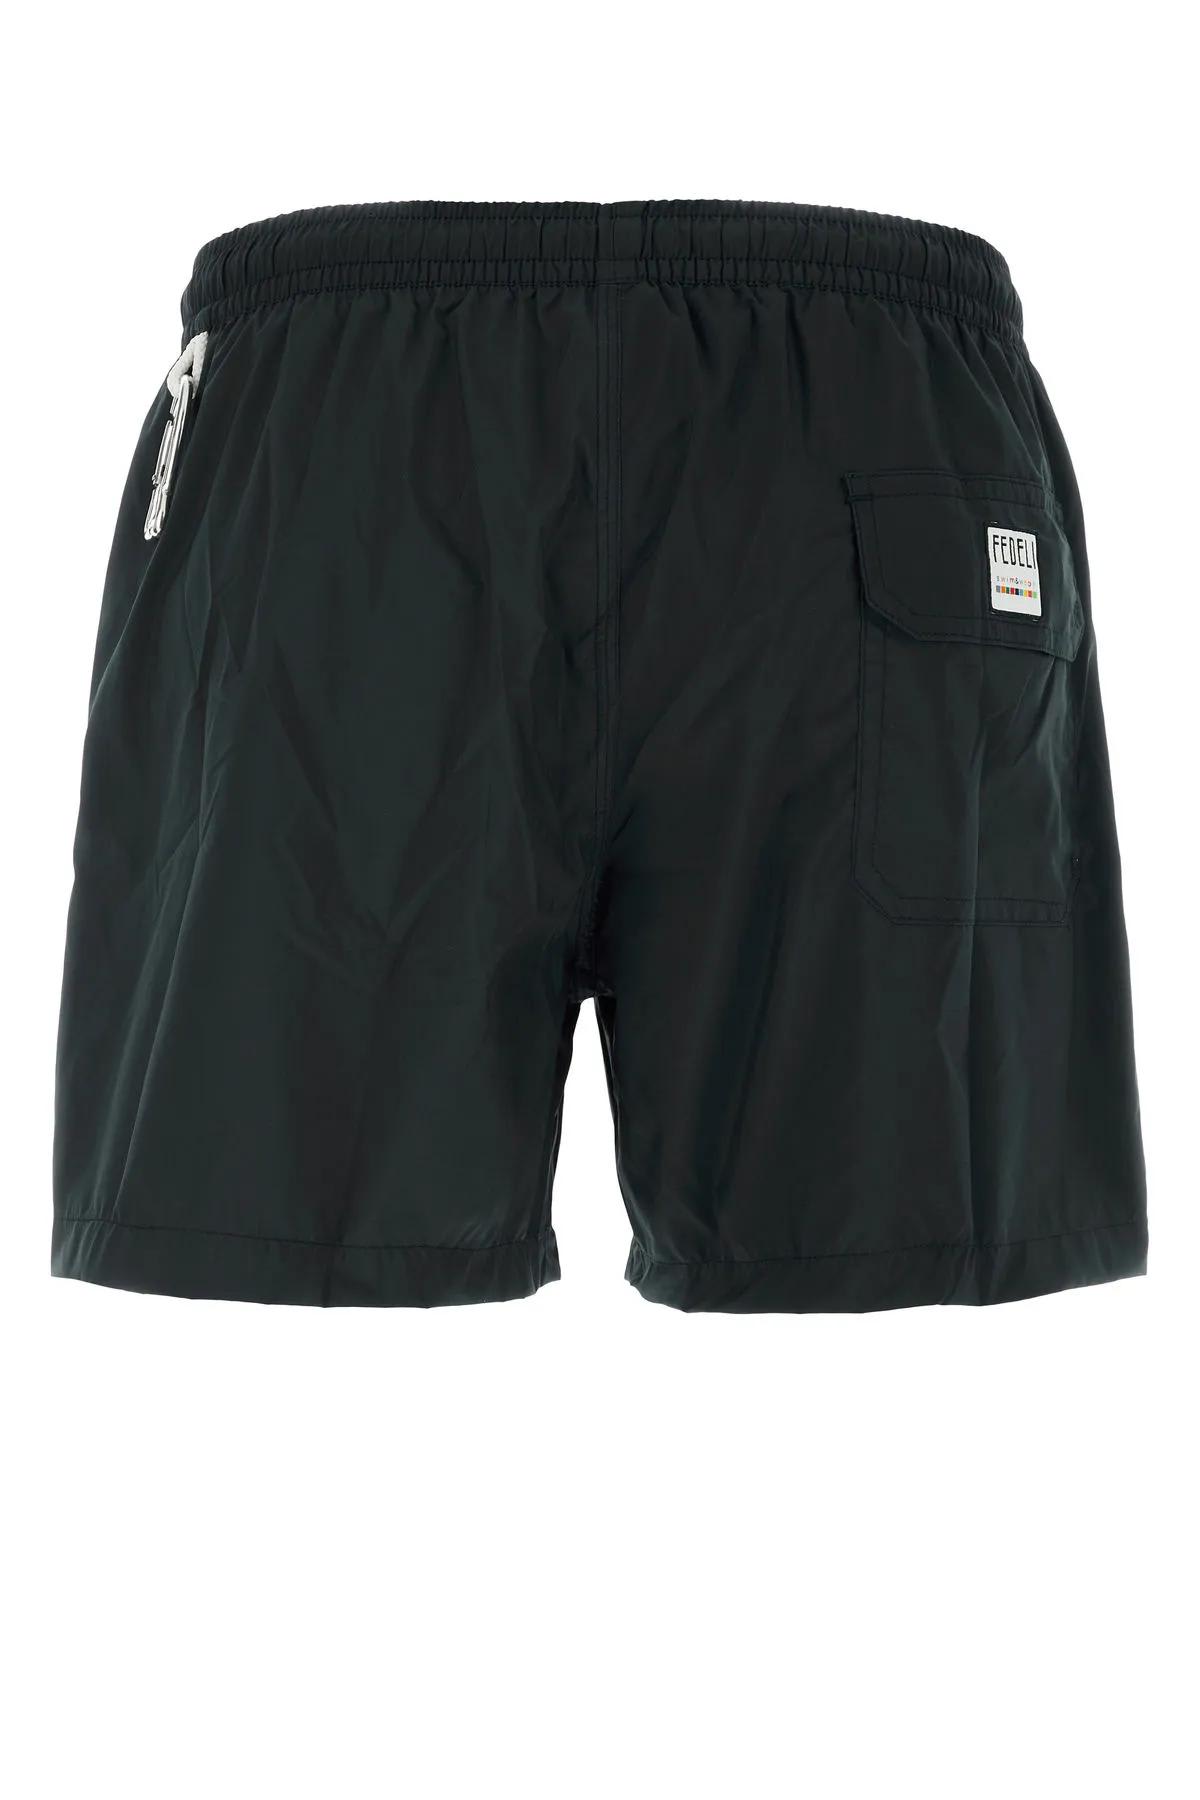 Shop Fedeli Black Polyester Swimming Shorts